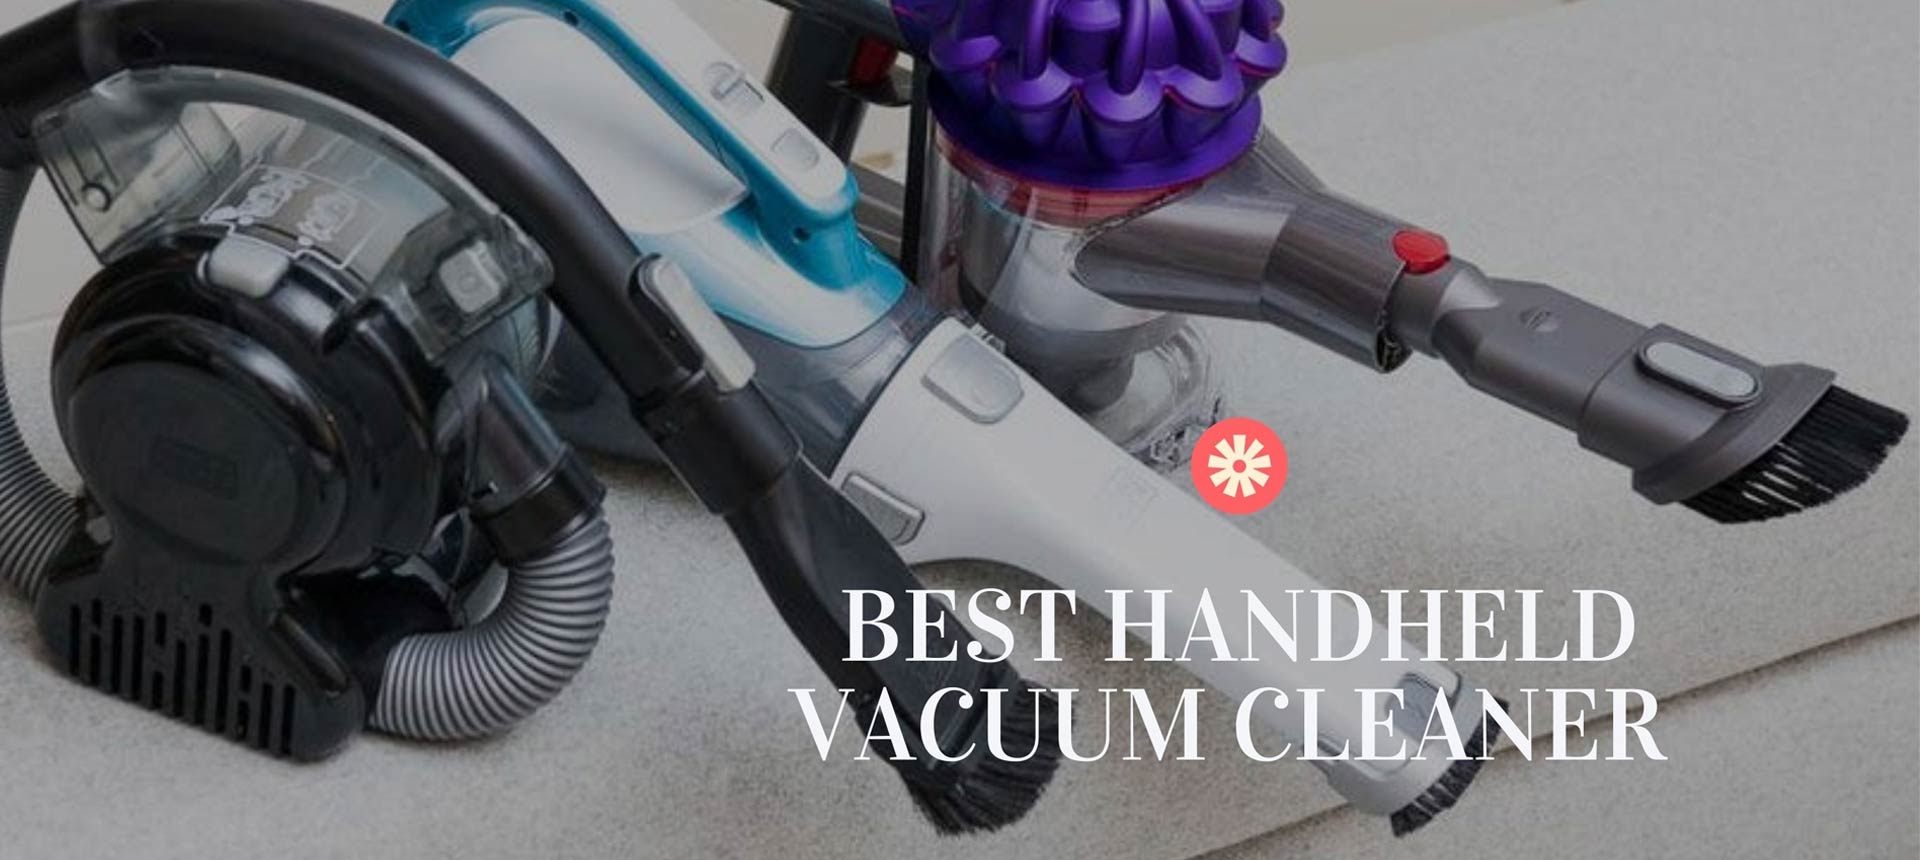 Best Handheld Vacuum Cleaner to Buy for 2021